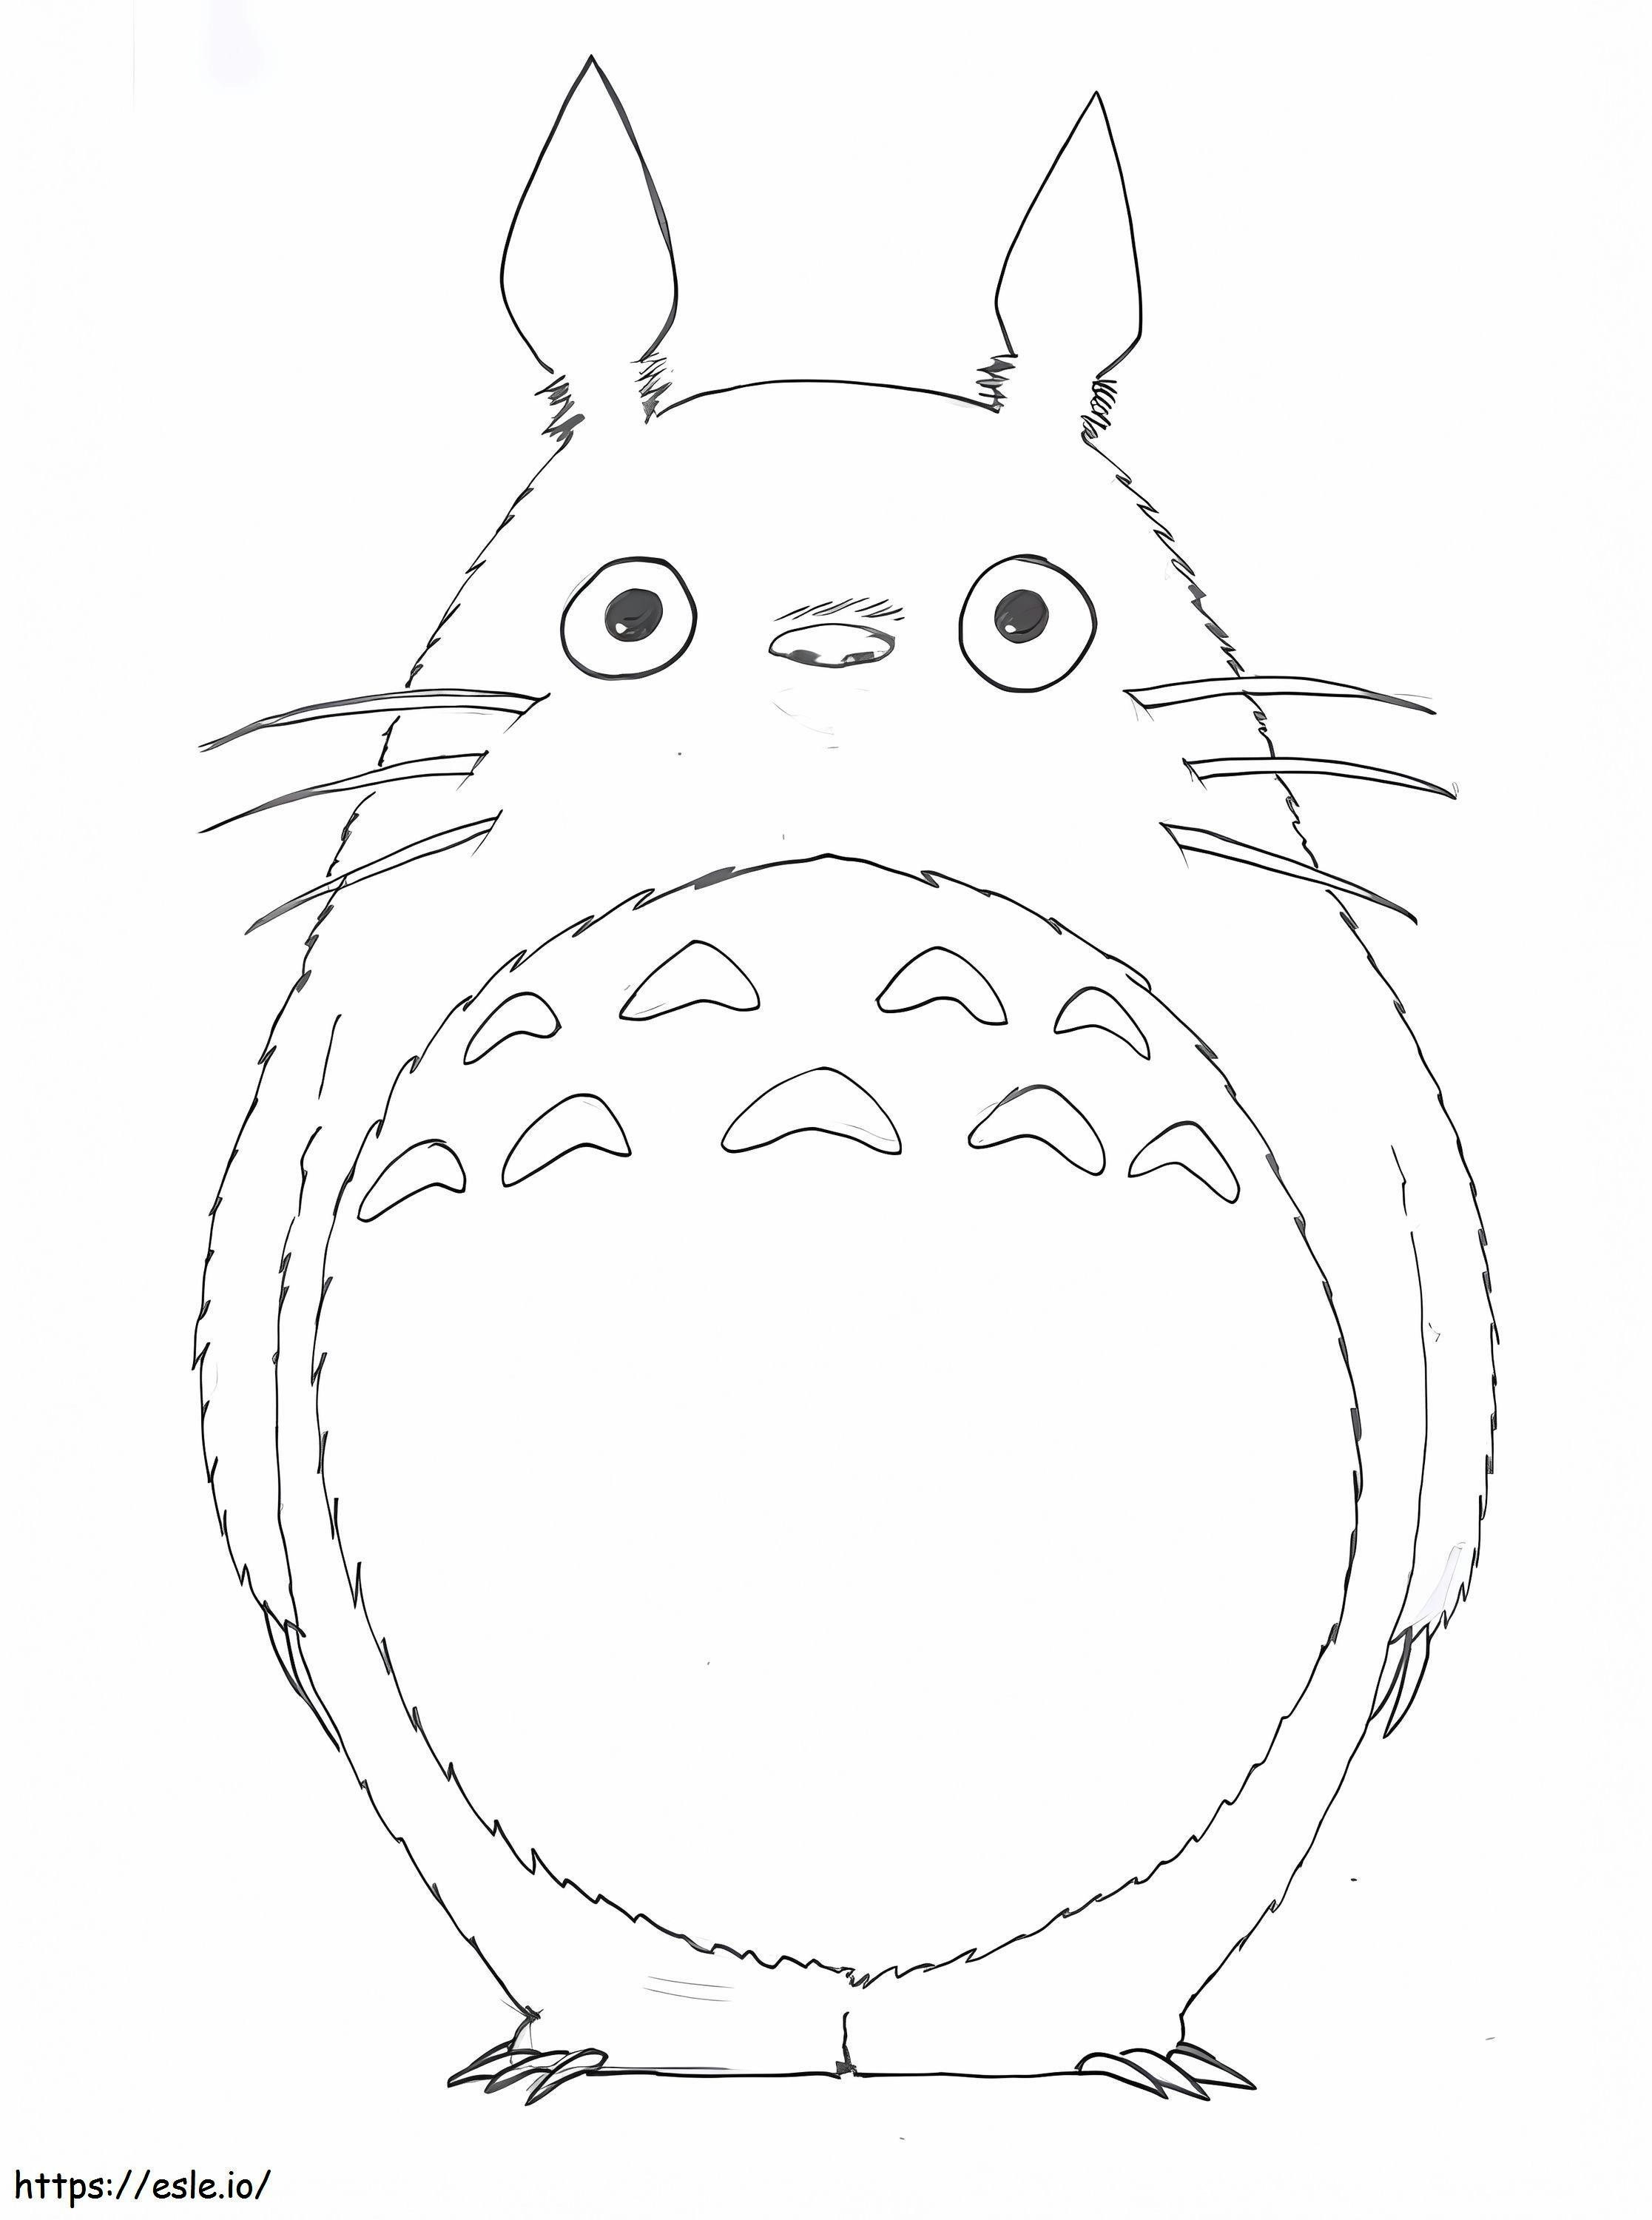 Coloriage Totoro drôle à imprimer dessin